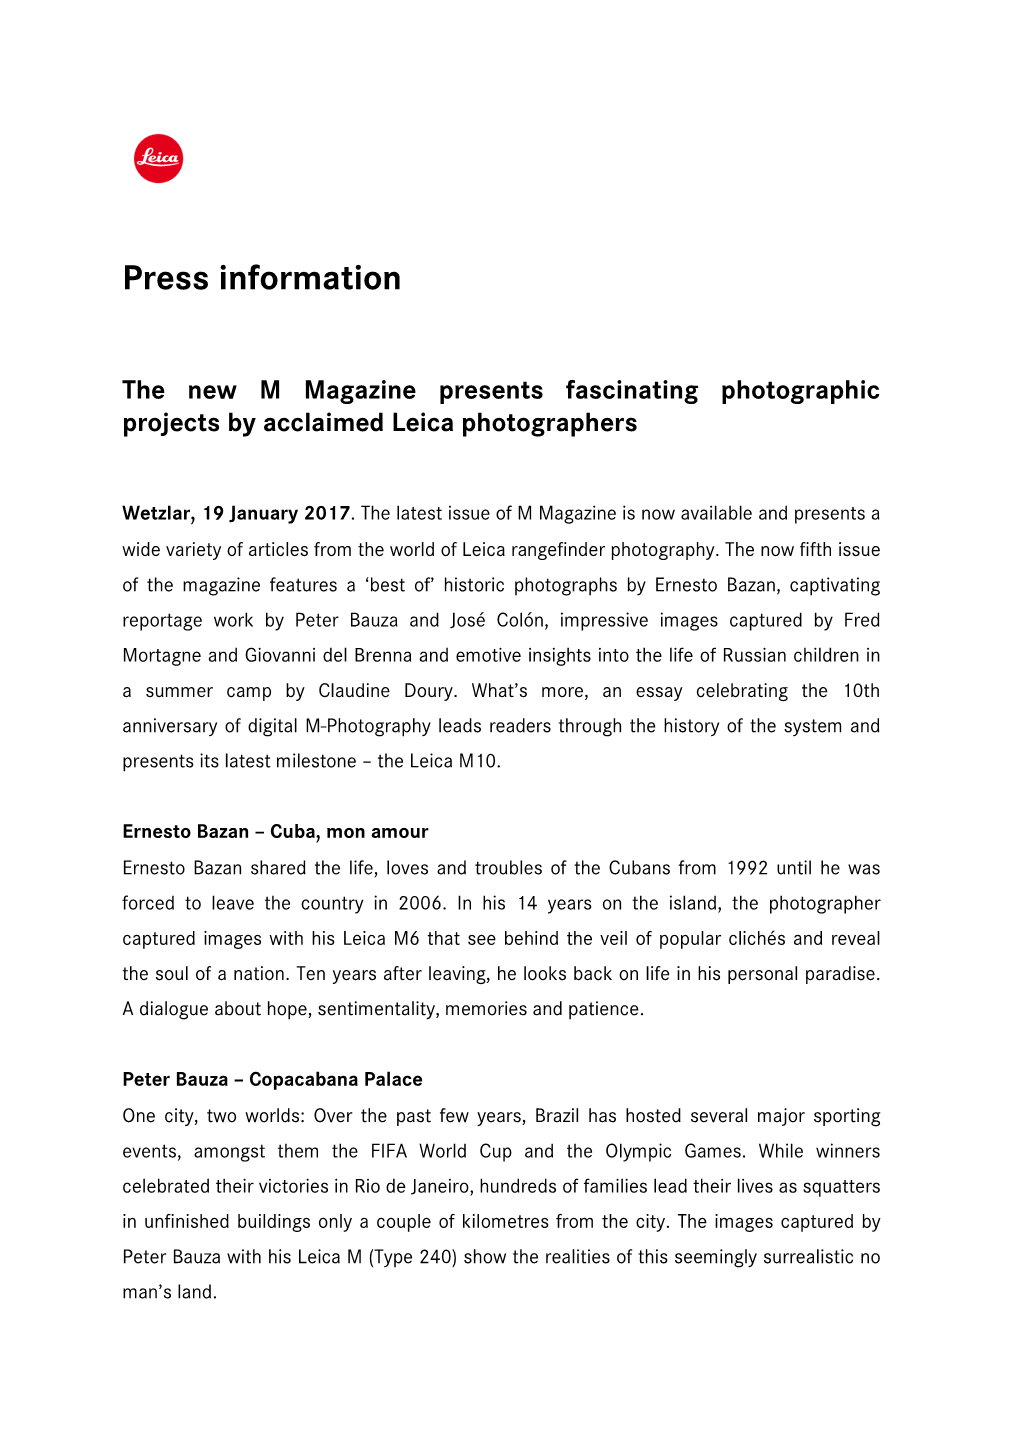 Press Information